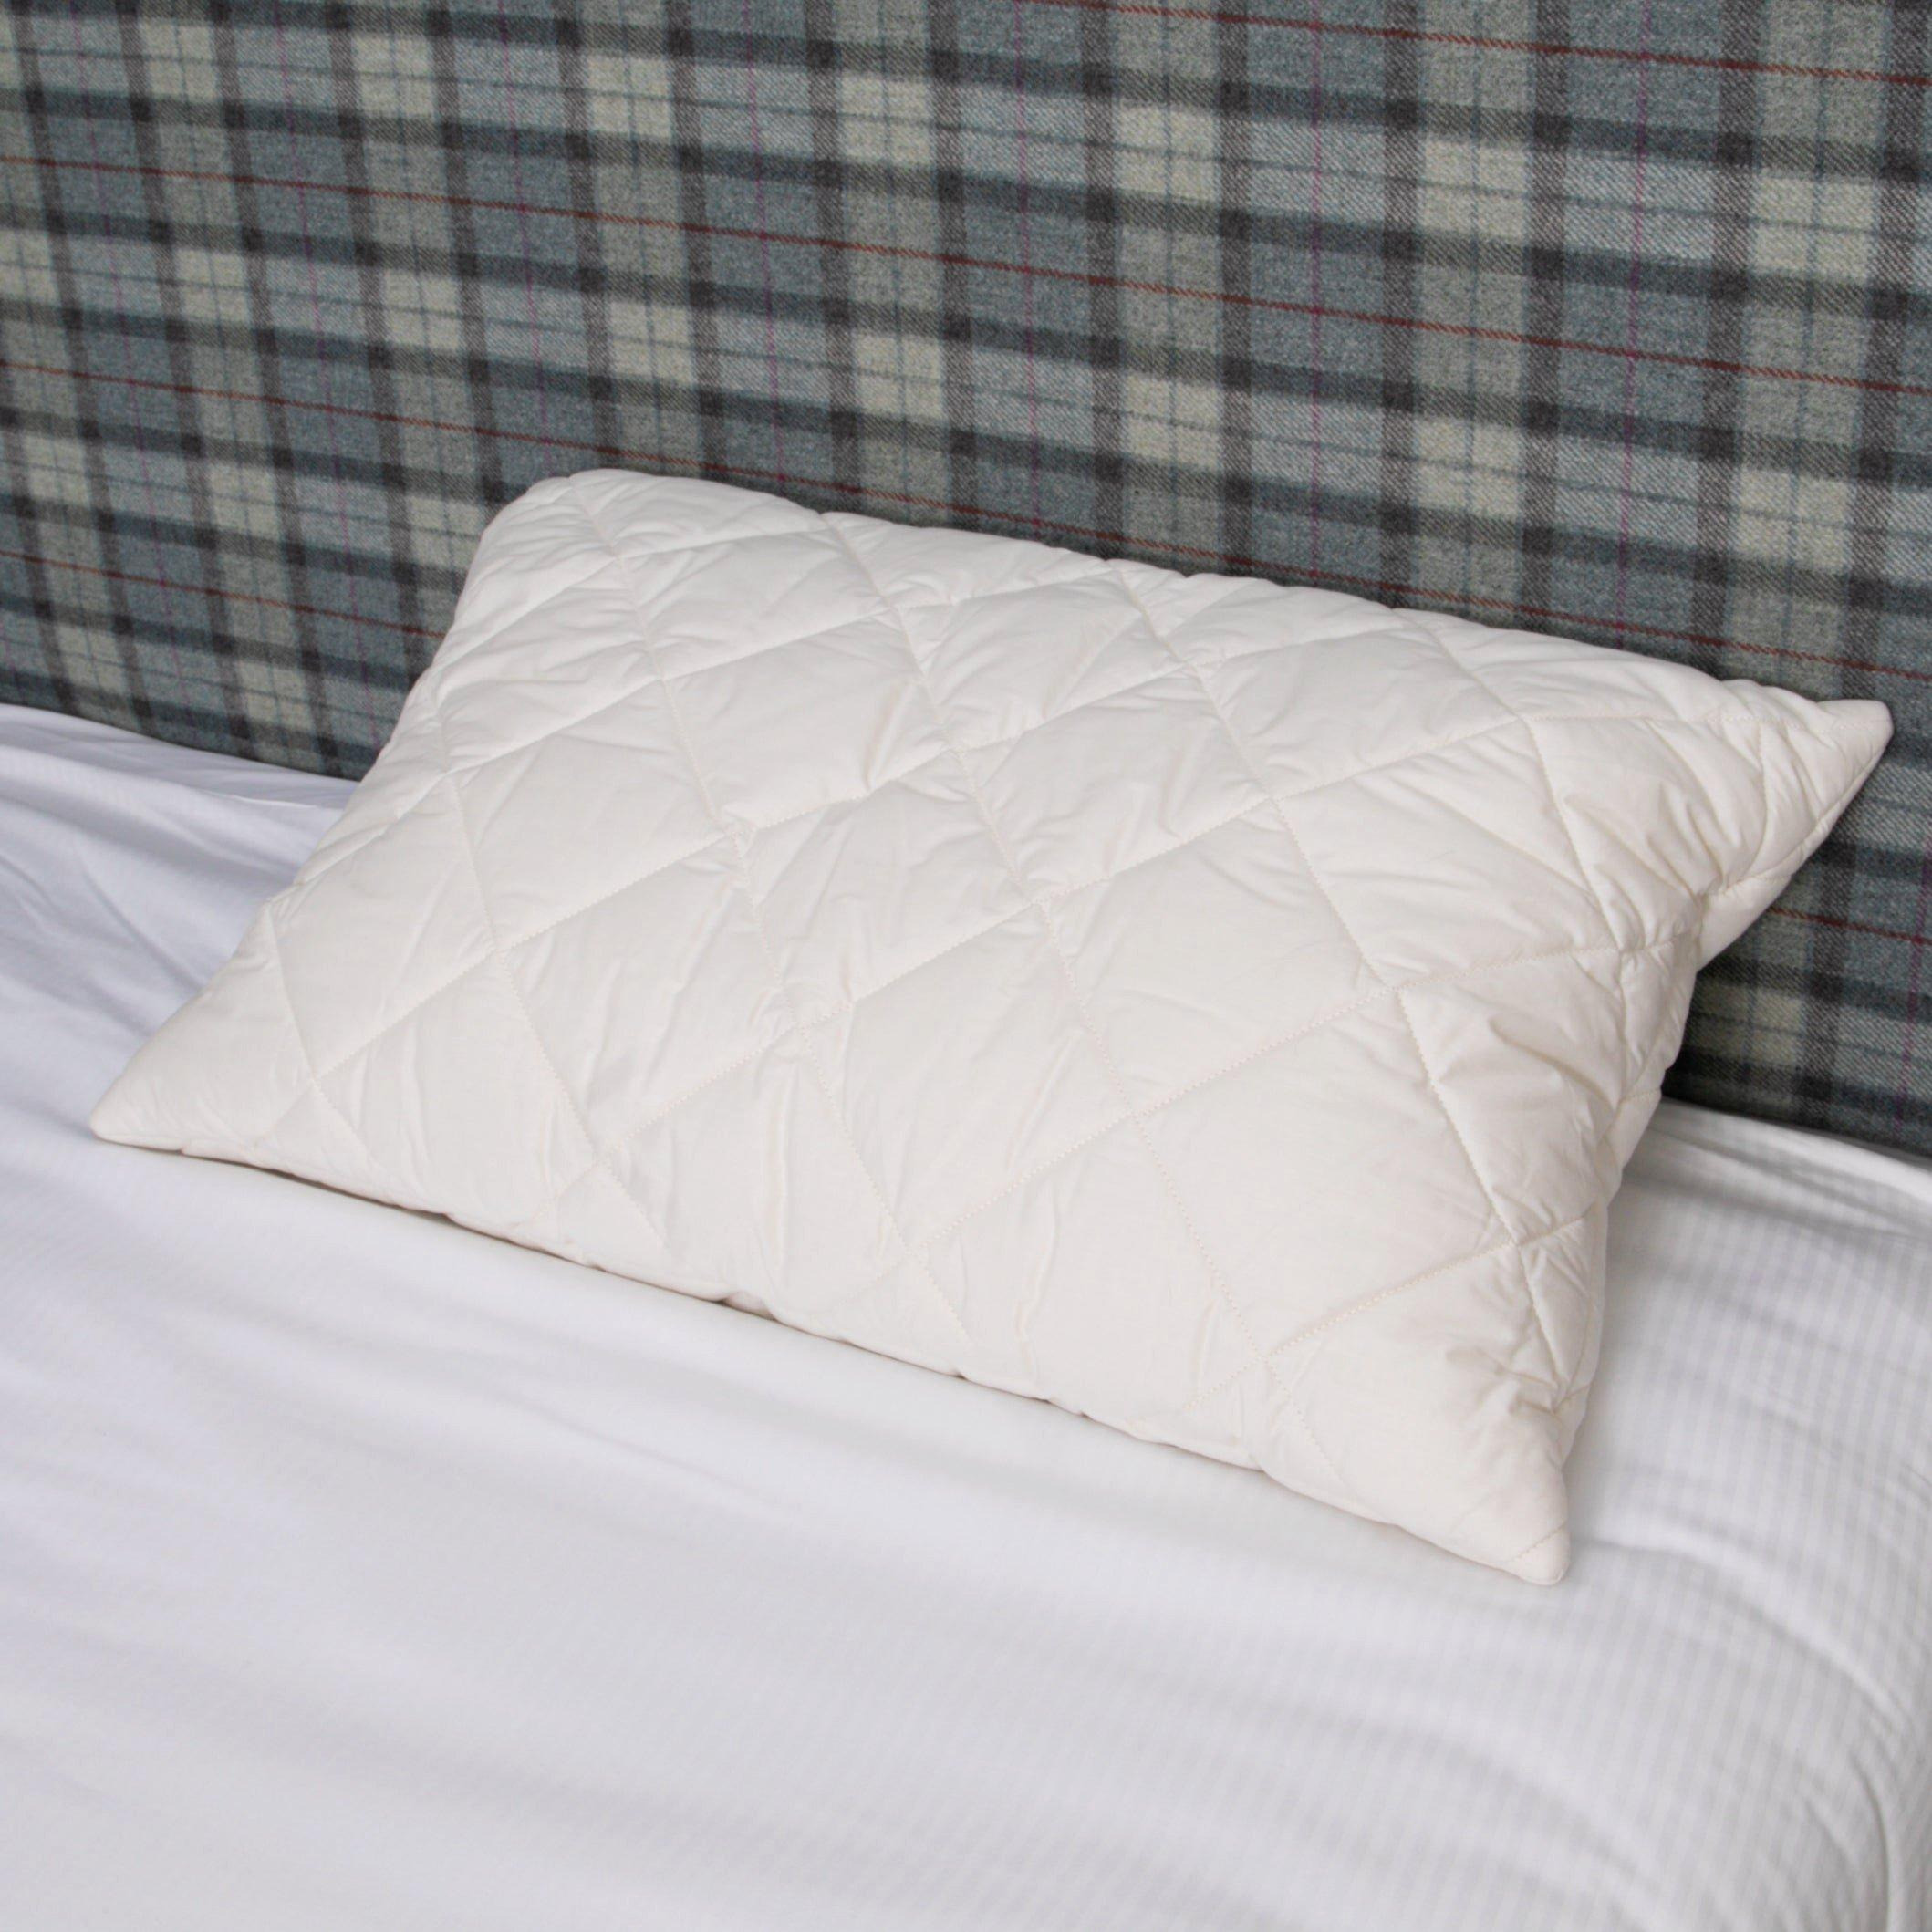 Native Natural Wool Filled Pillow  (set of 2) - image 1